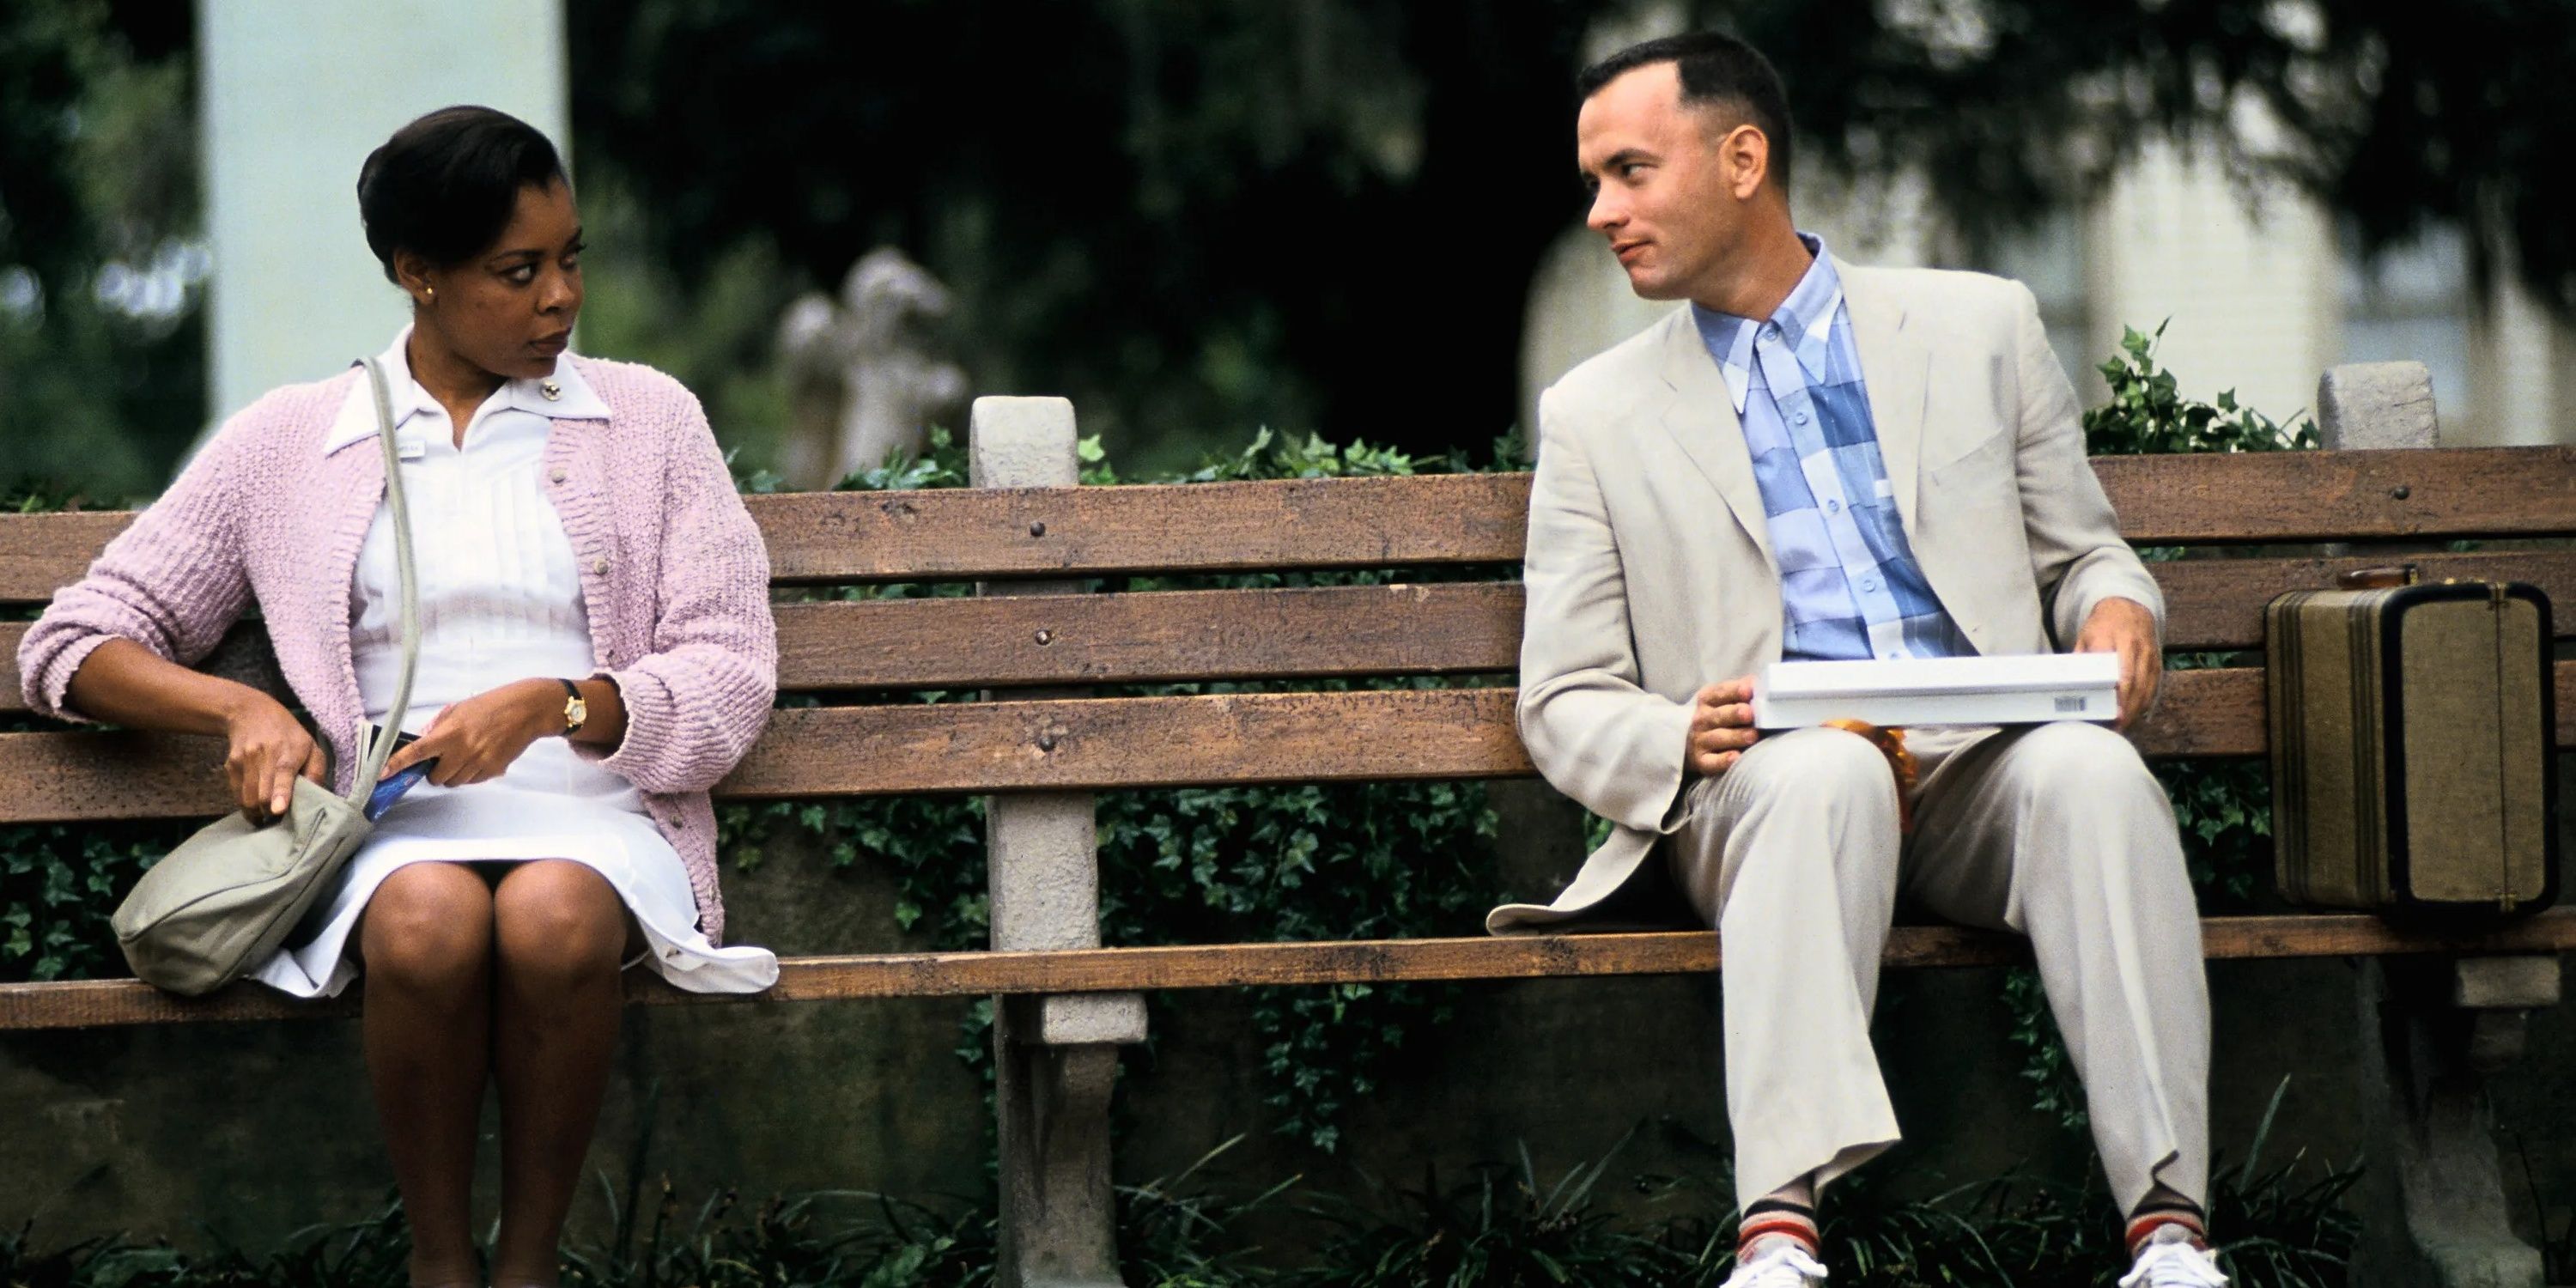 Tom Hanks as Forrest Gump talking to the stranger on the bench